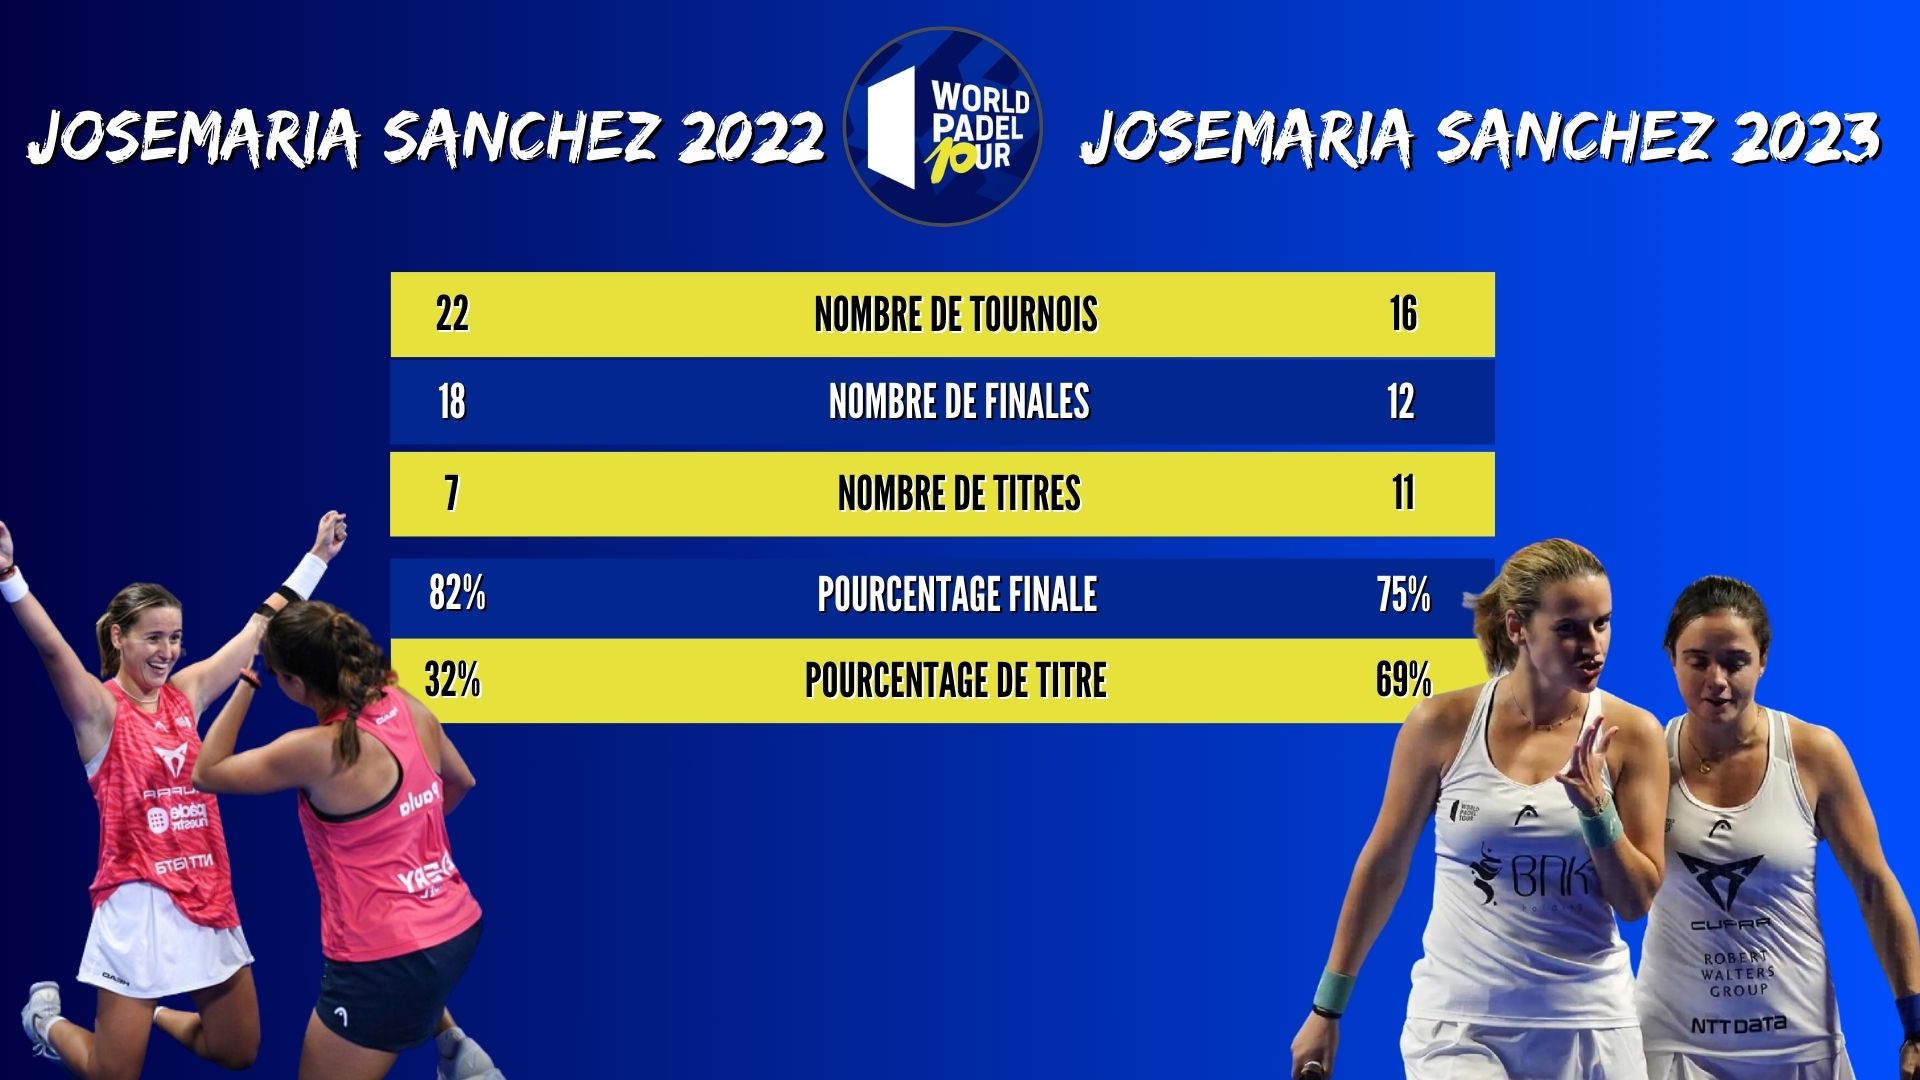 Josemaria Sanchez 2022 vs Josemaria Sanchez 2023